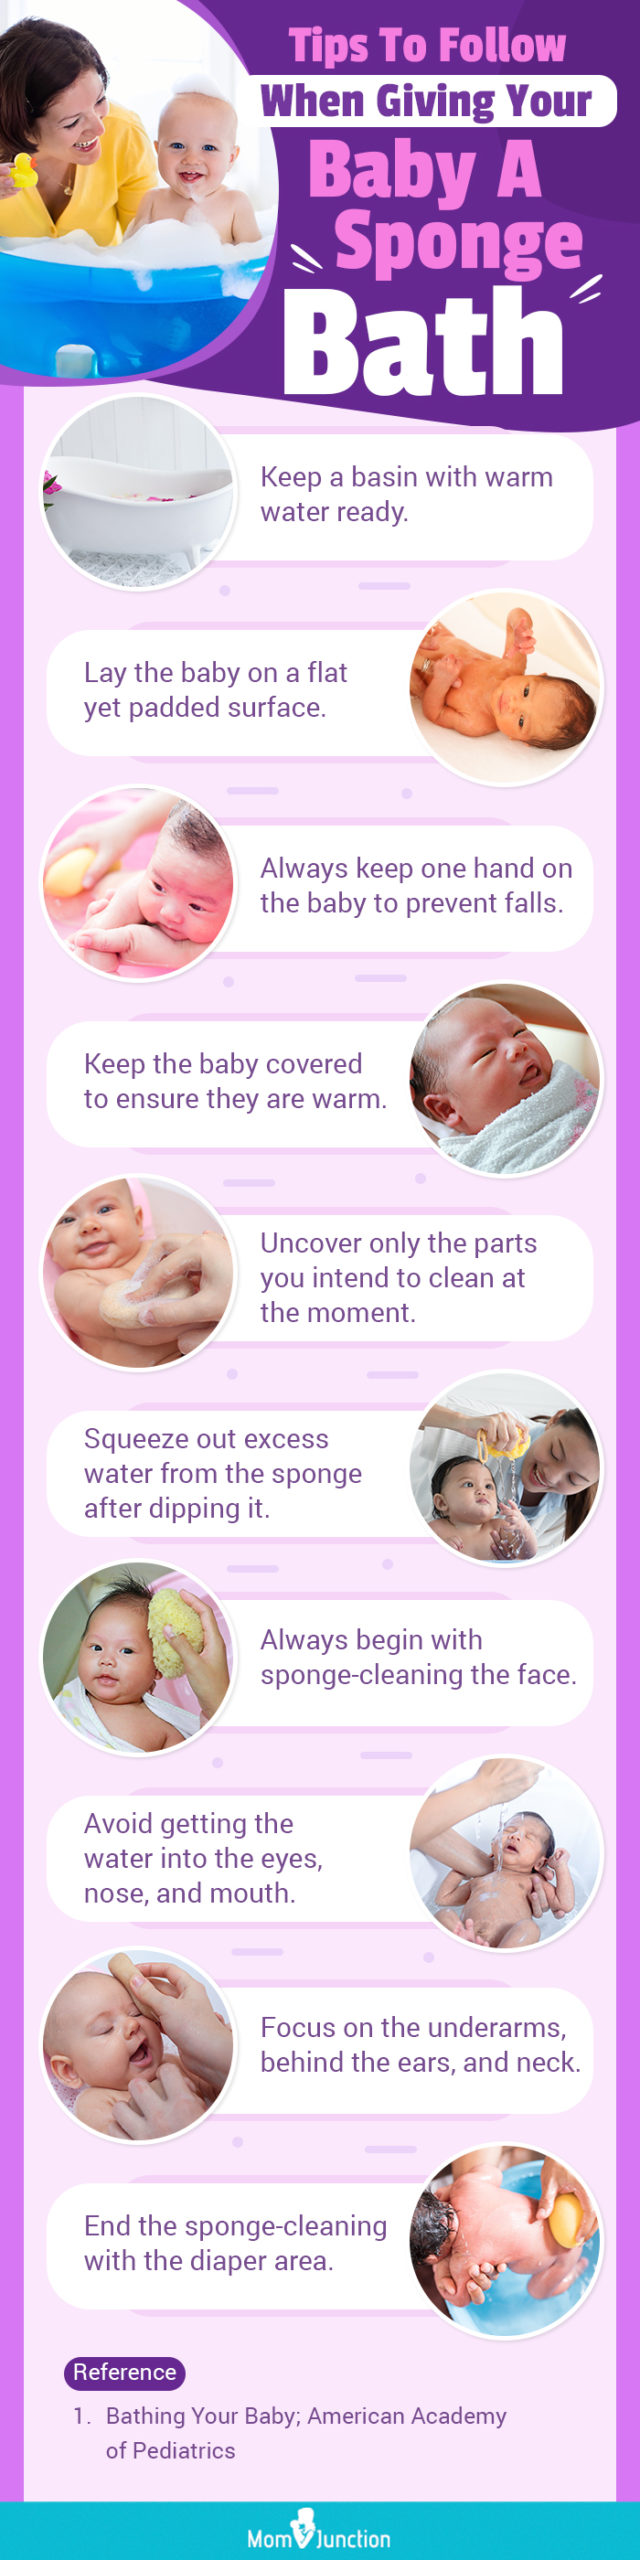 Baby Sponge Bath: How To Give Your Newborn A Sponge Bath?